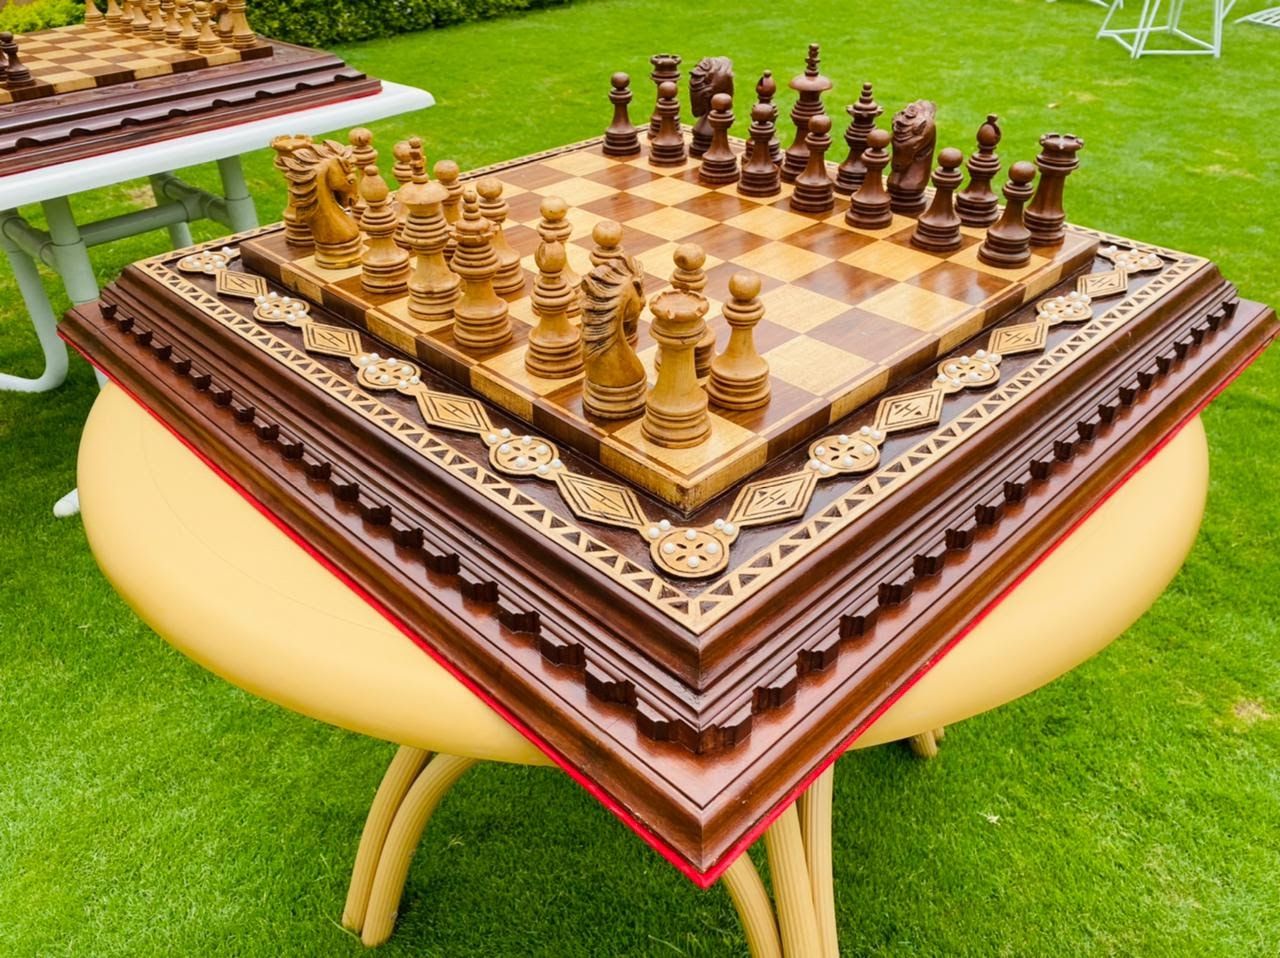 Sold at Auction: HERMÈS, Hermes A Wood Samarcande Chess Set